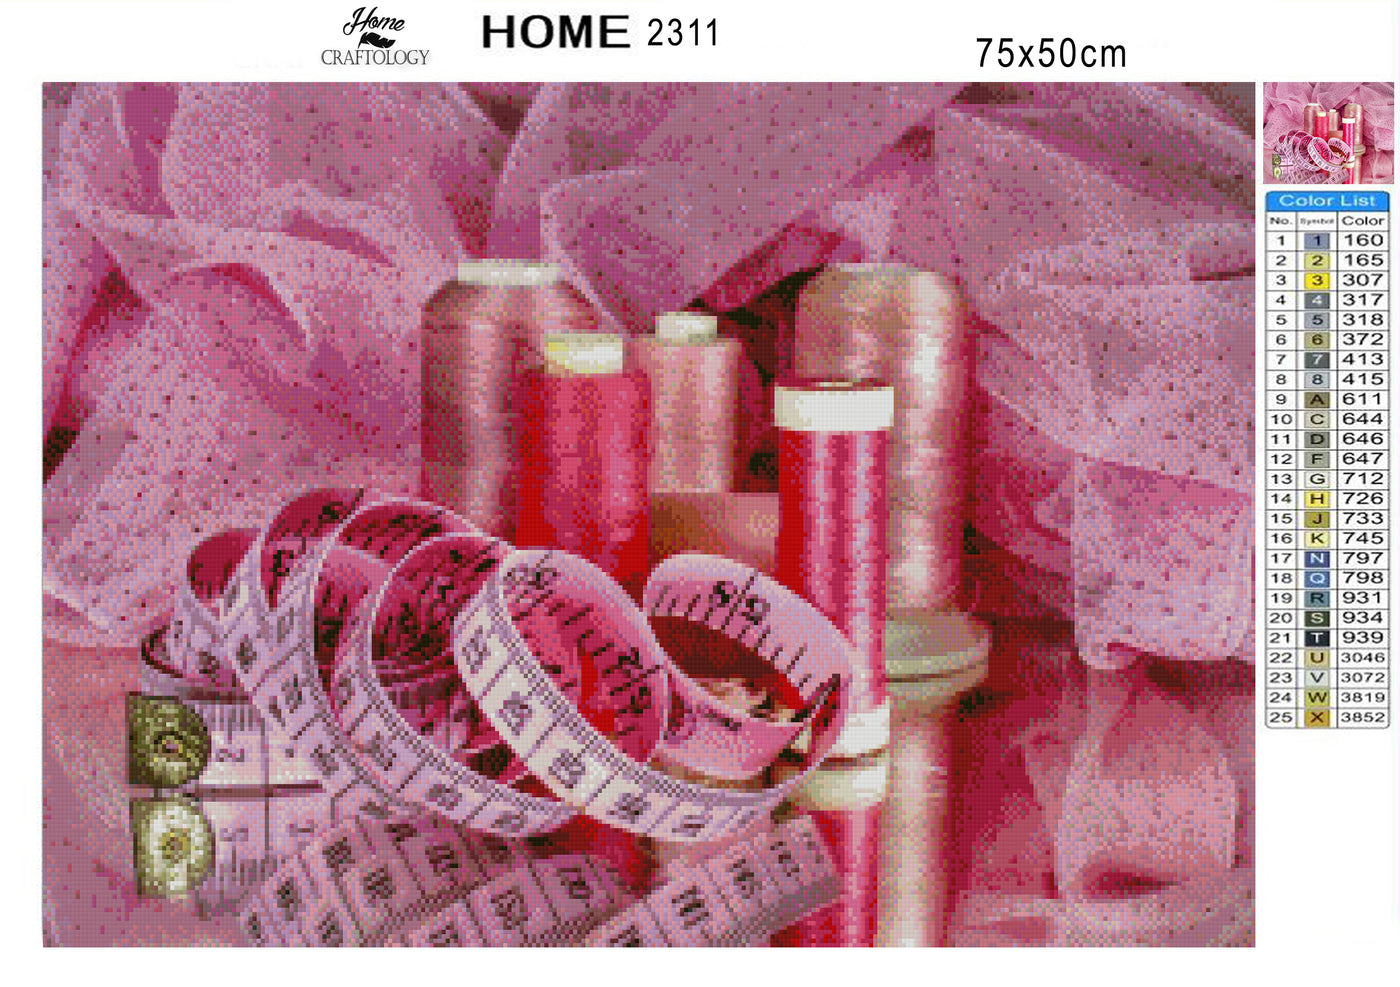 Pink Sewing Materials - Premium Diamond Painting Kit